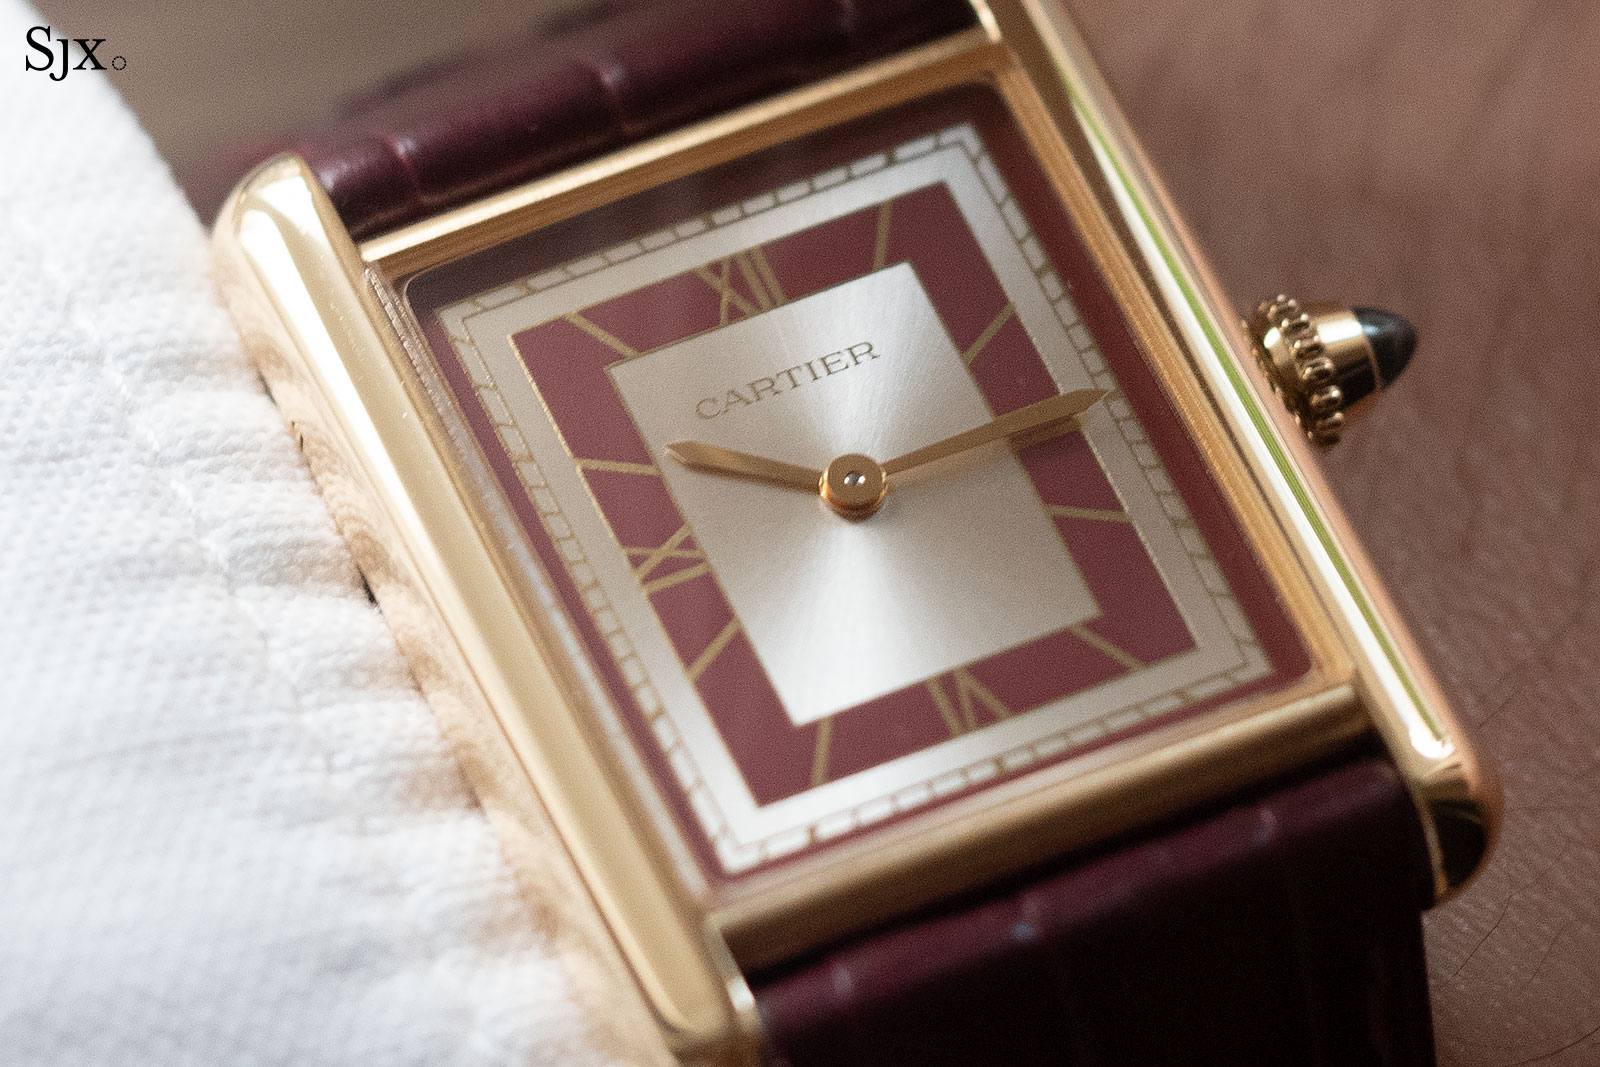 Cartier Tank Louis Cartier Large Watches From SwissLuxury